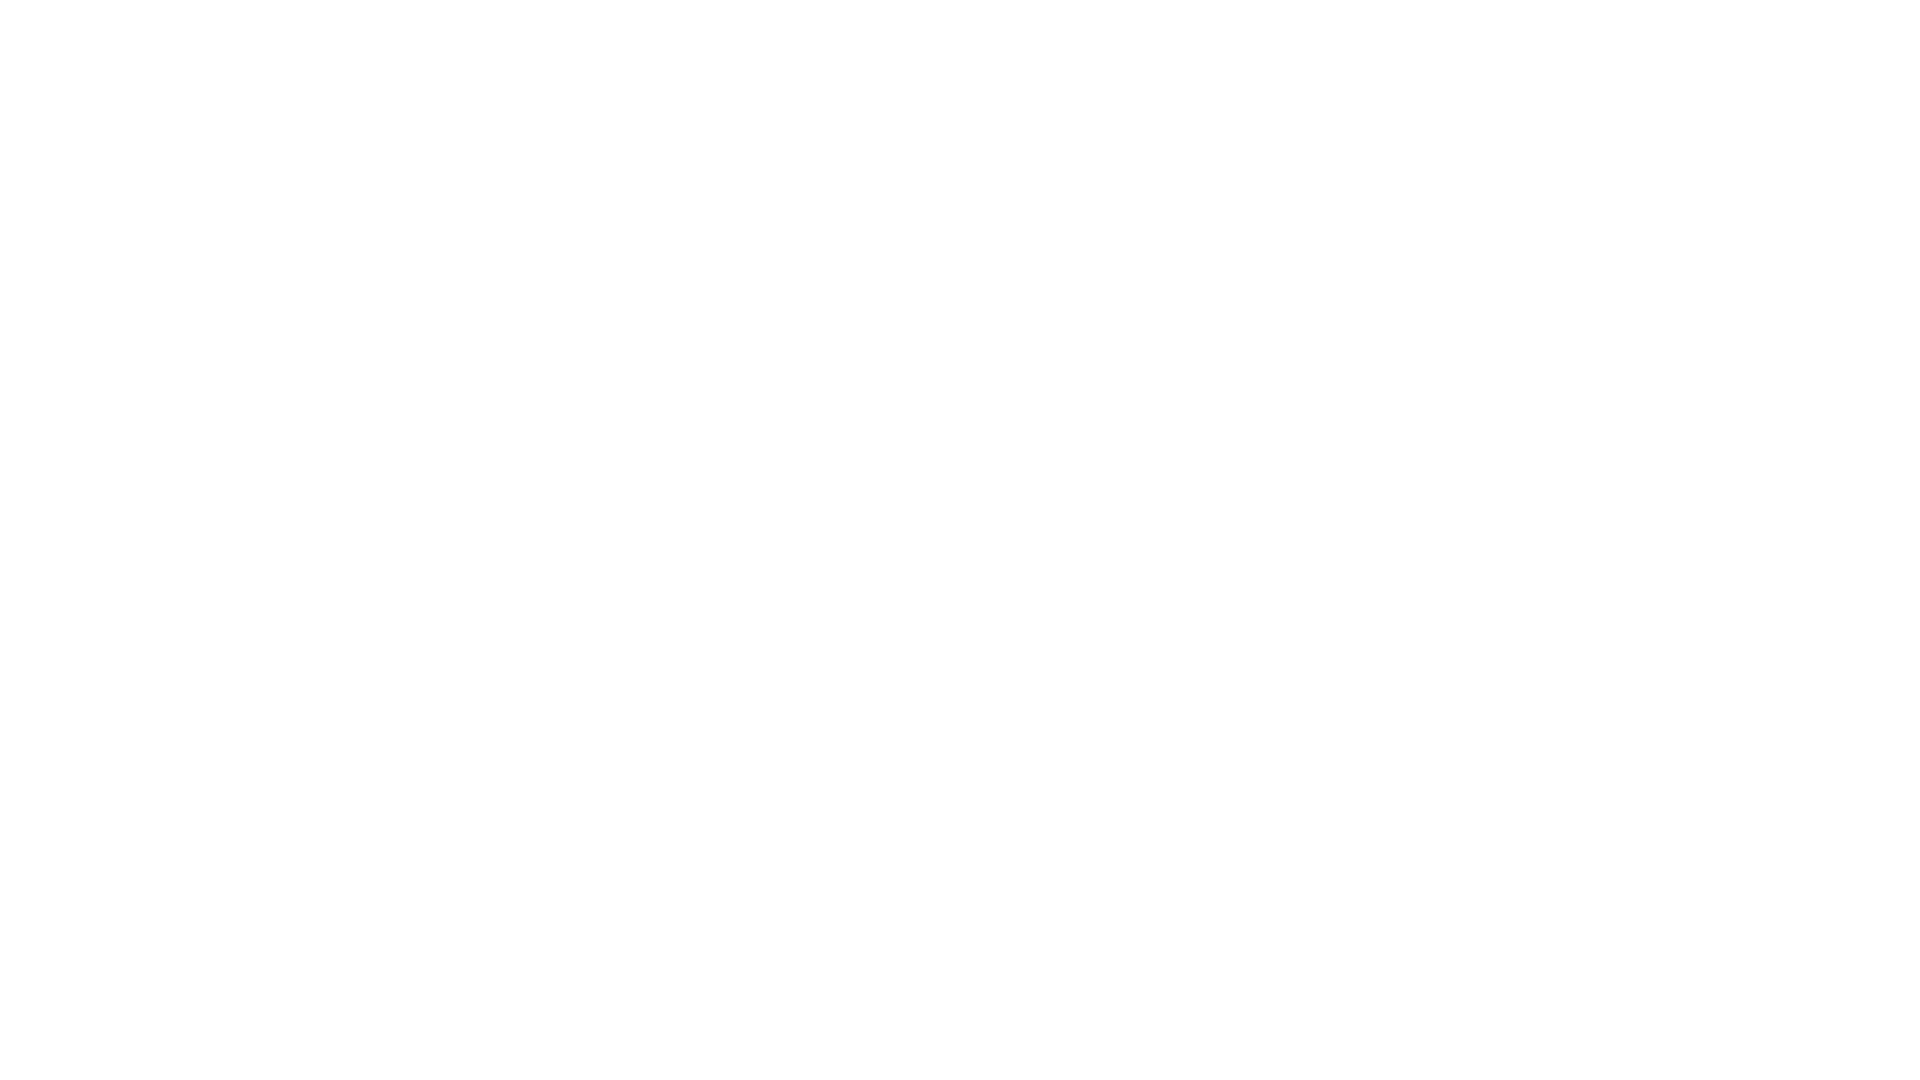 Morse Souls: Crimson King of the Dark Tower